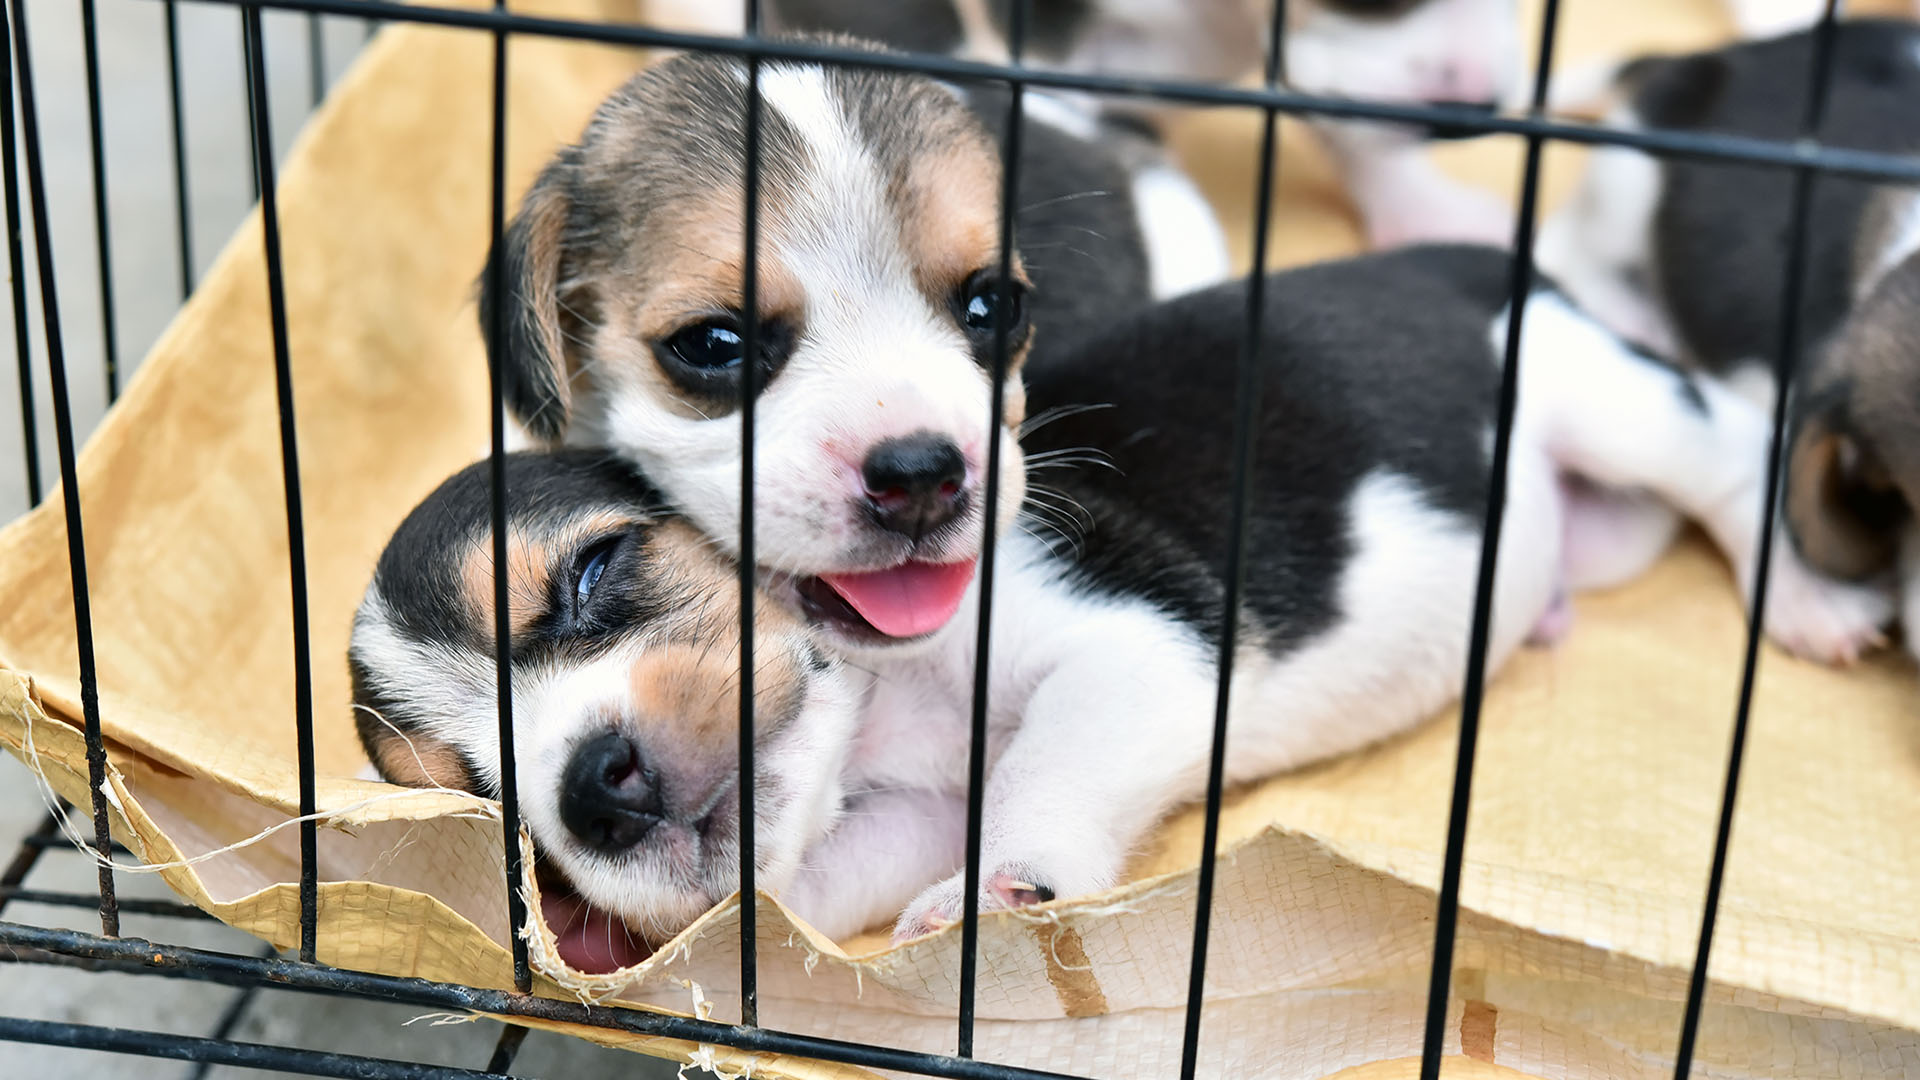 Tell Craigslist to Shut Down Animal Sales - Animal Legal Defense Fund